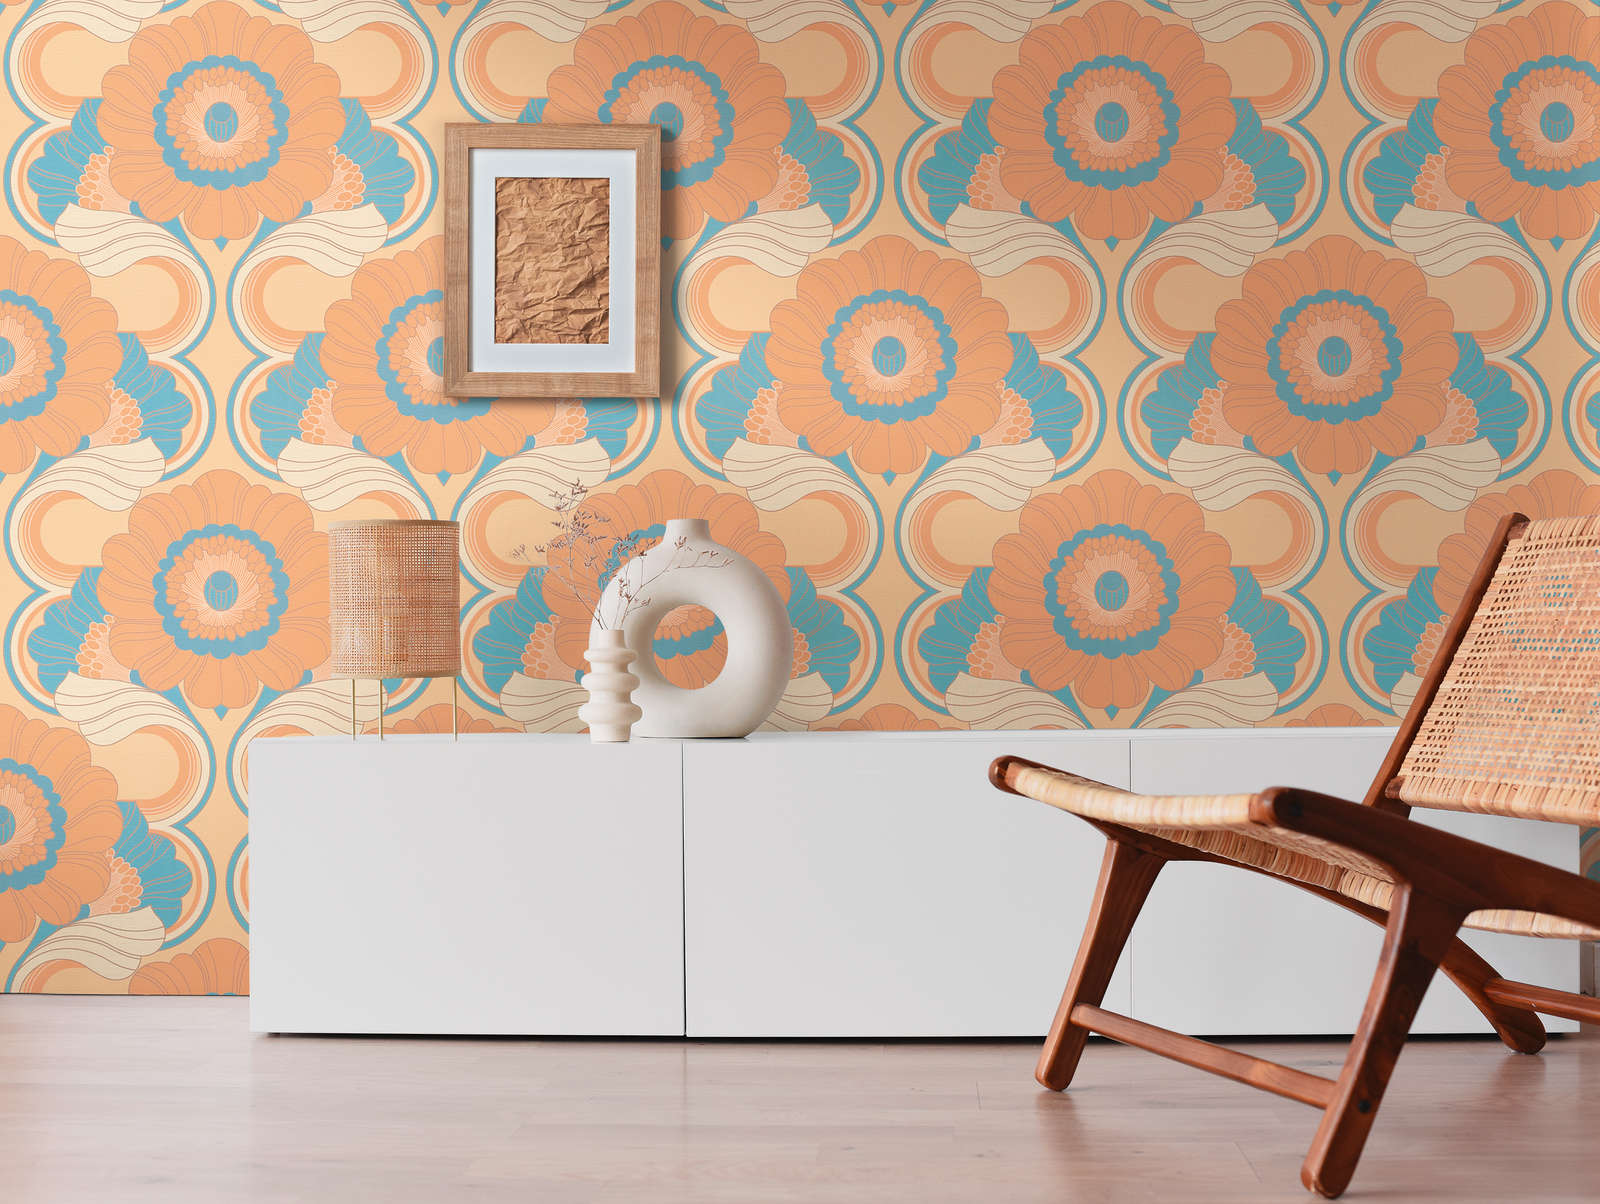             Floral non-woven wallpaper in retro style - beige, turquoise, orange
        